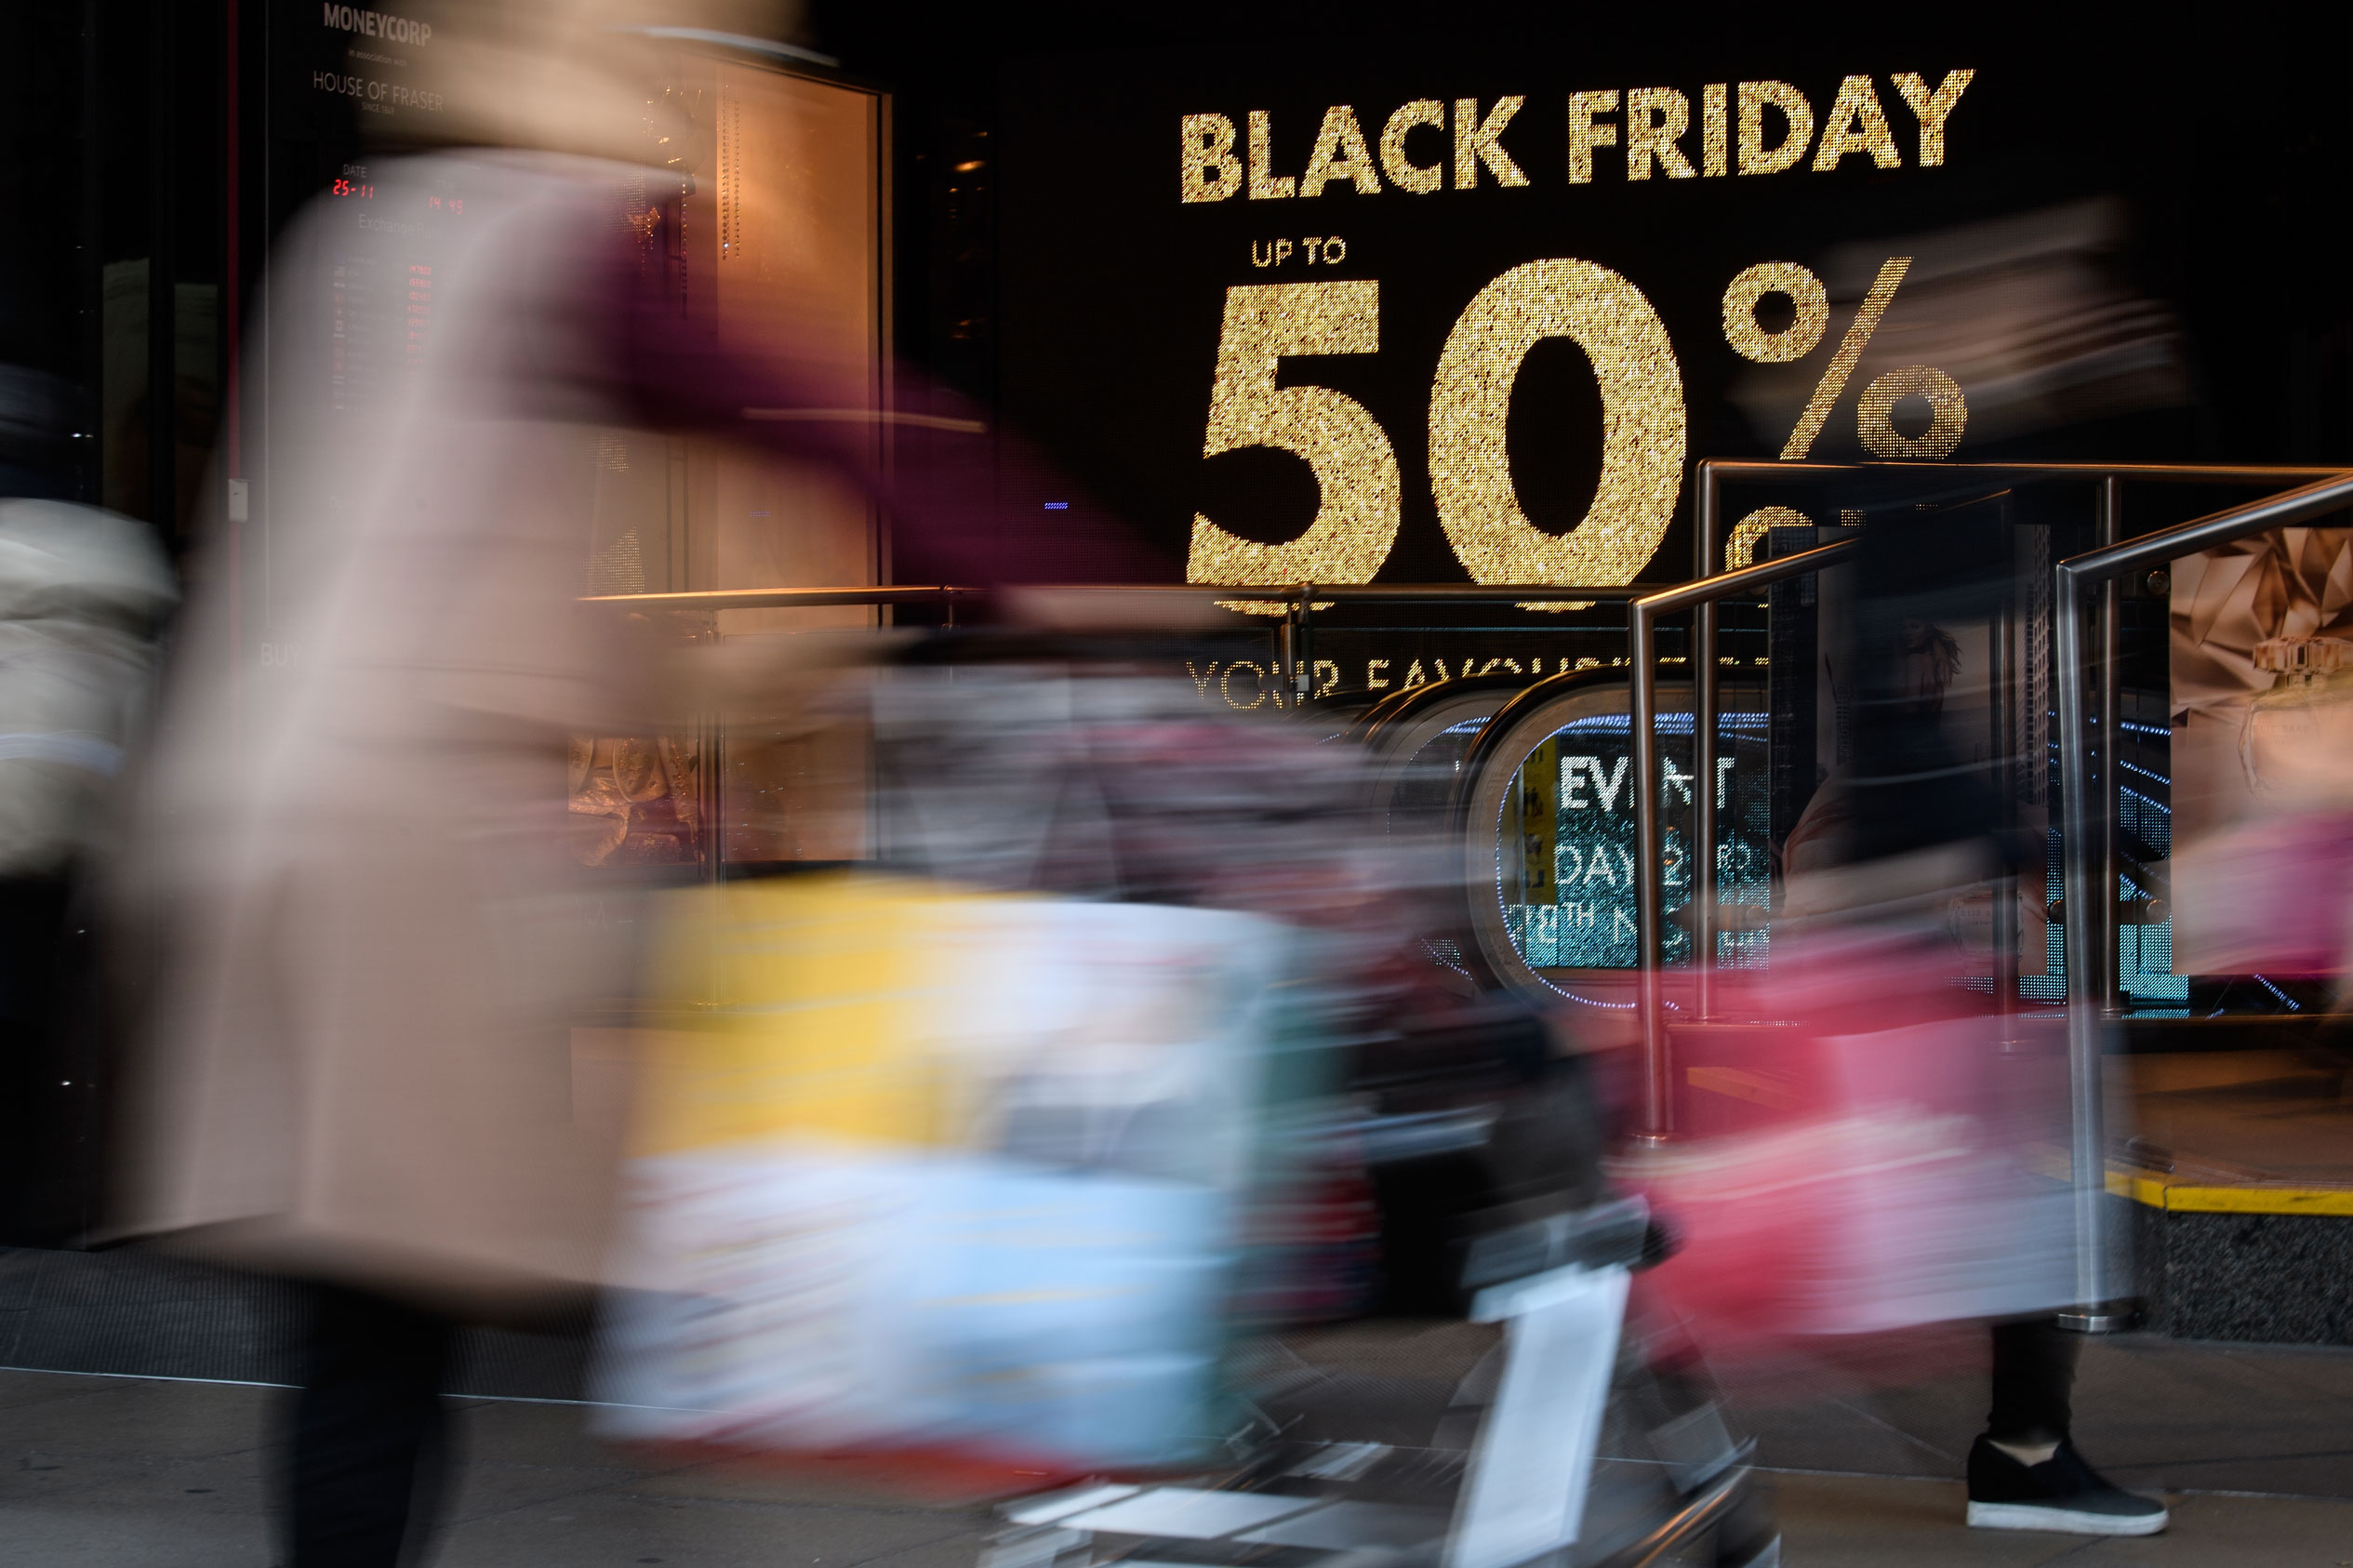 Black Friday Sees Record 7 4b In Online Sales 2 9b Spent Using Smartphones Techcrunch